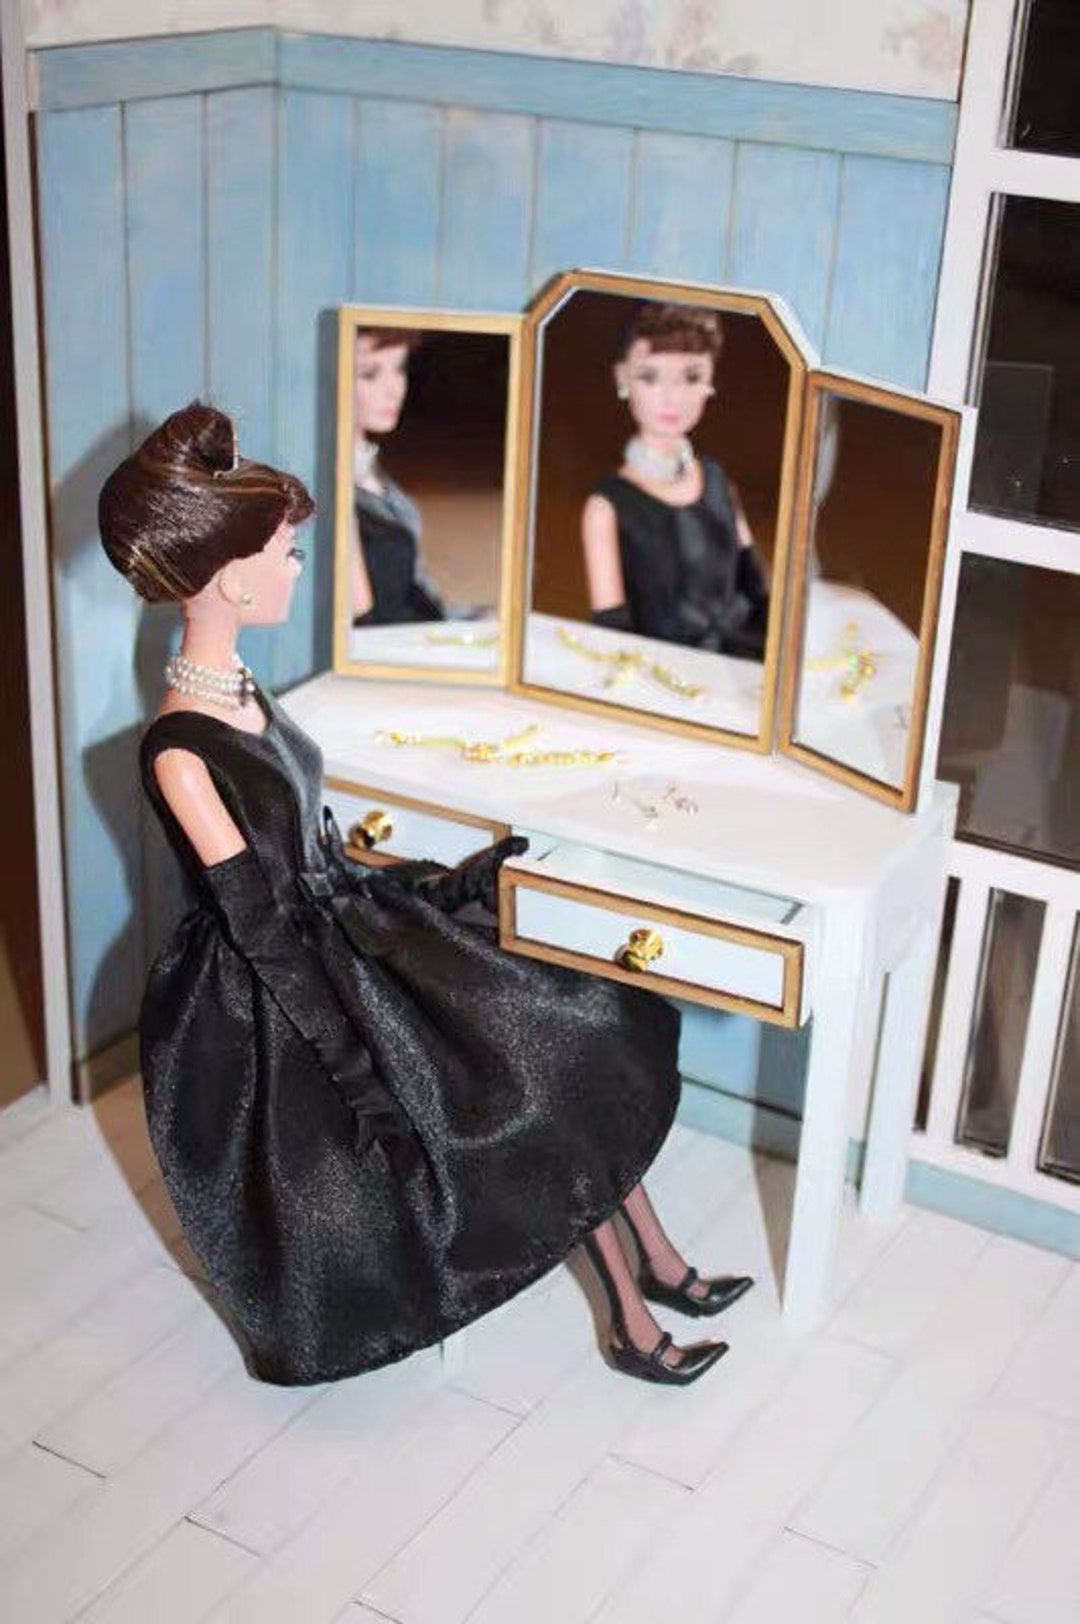 4 Mini 'ARTS & CRAFTS' Magazines Barbie Blythe Fashion Doll size 1:6  playscale